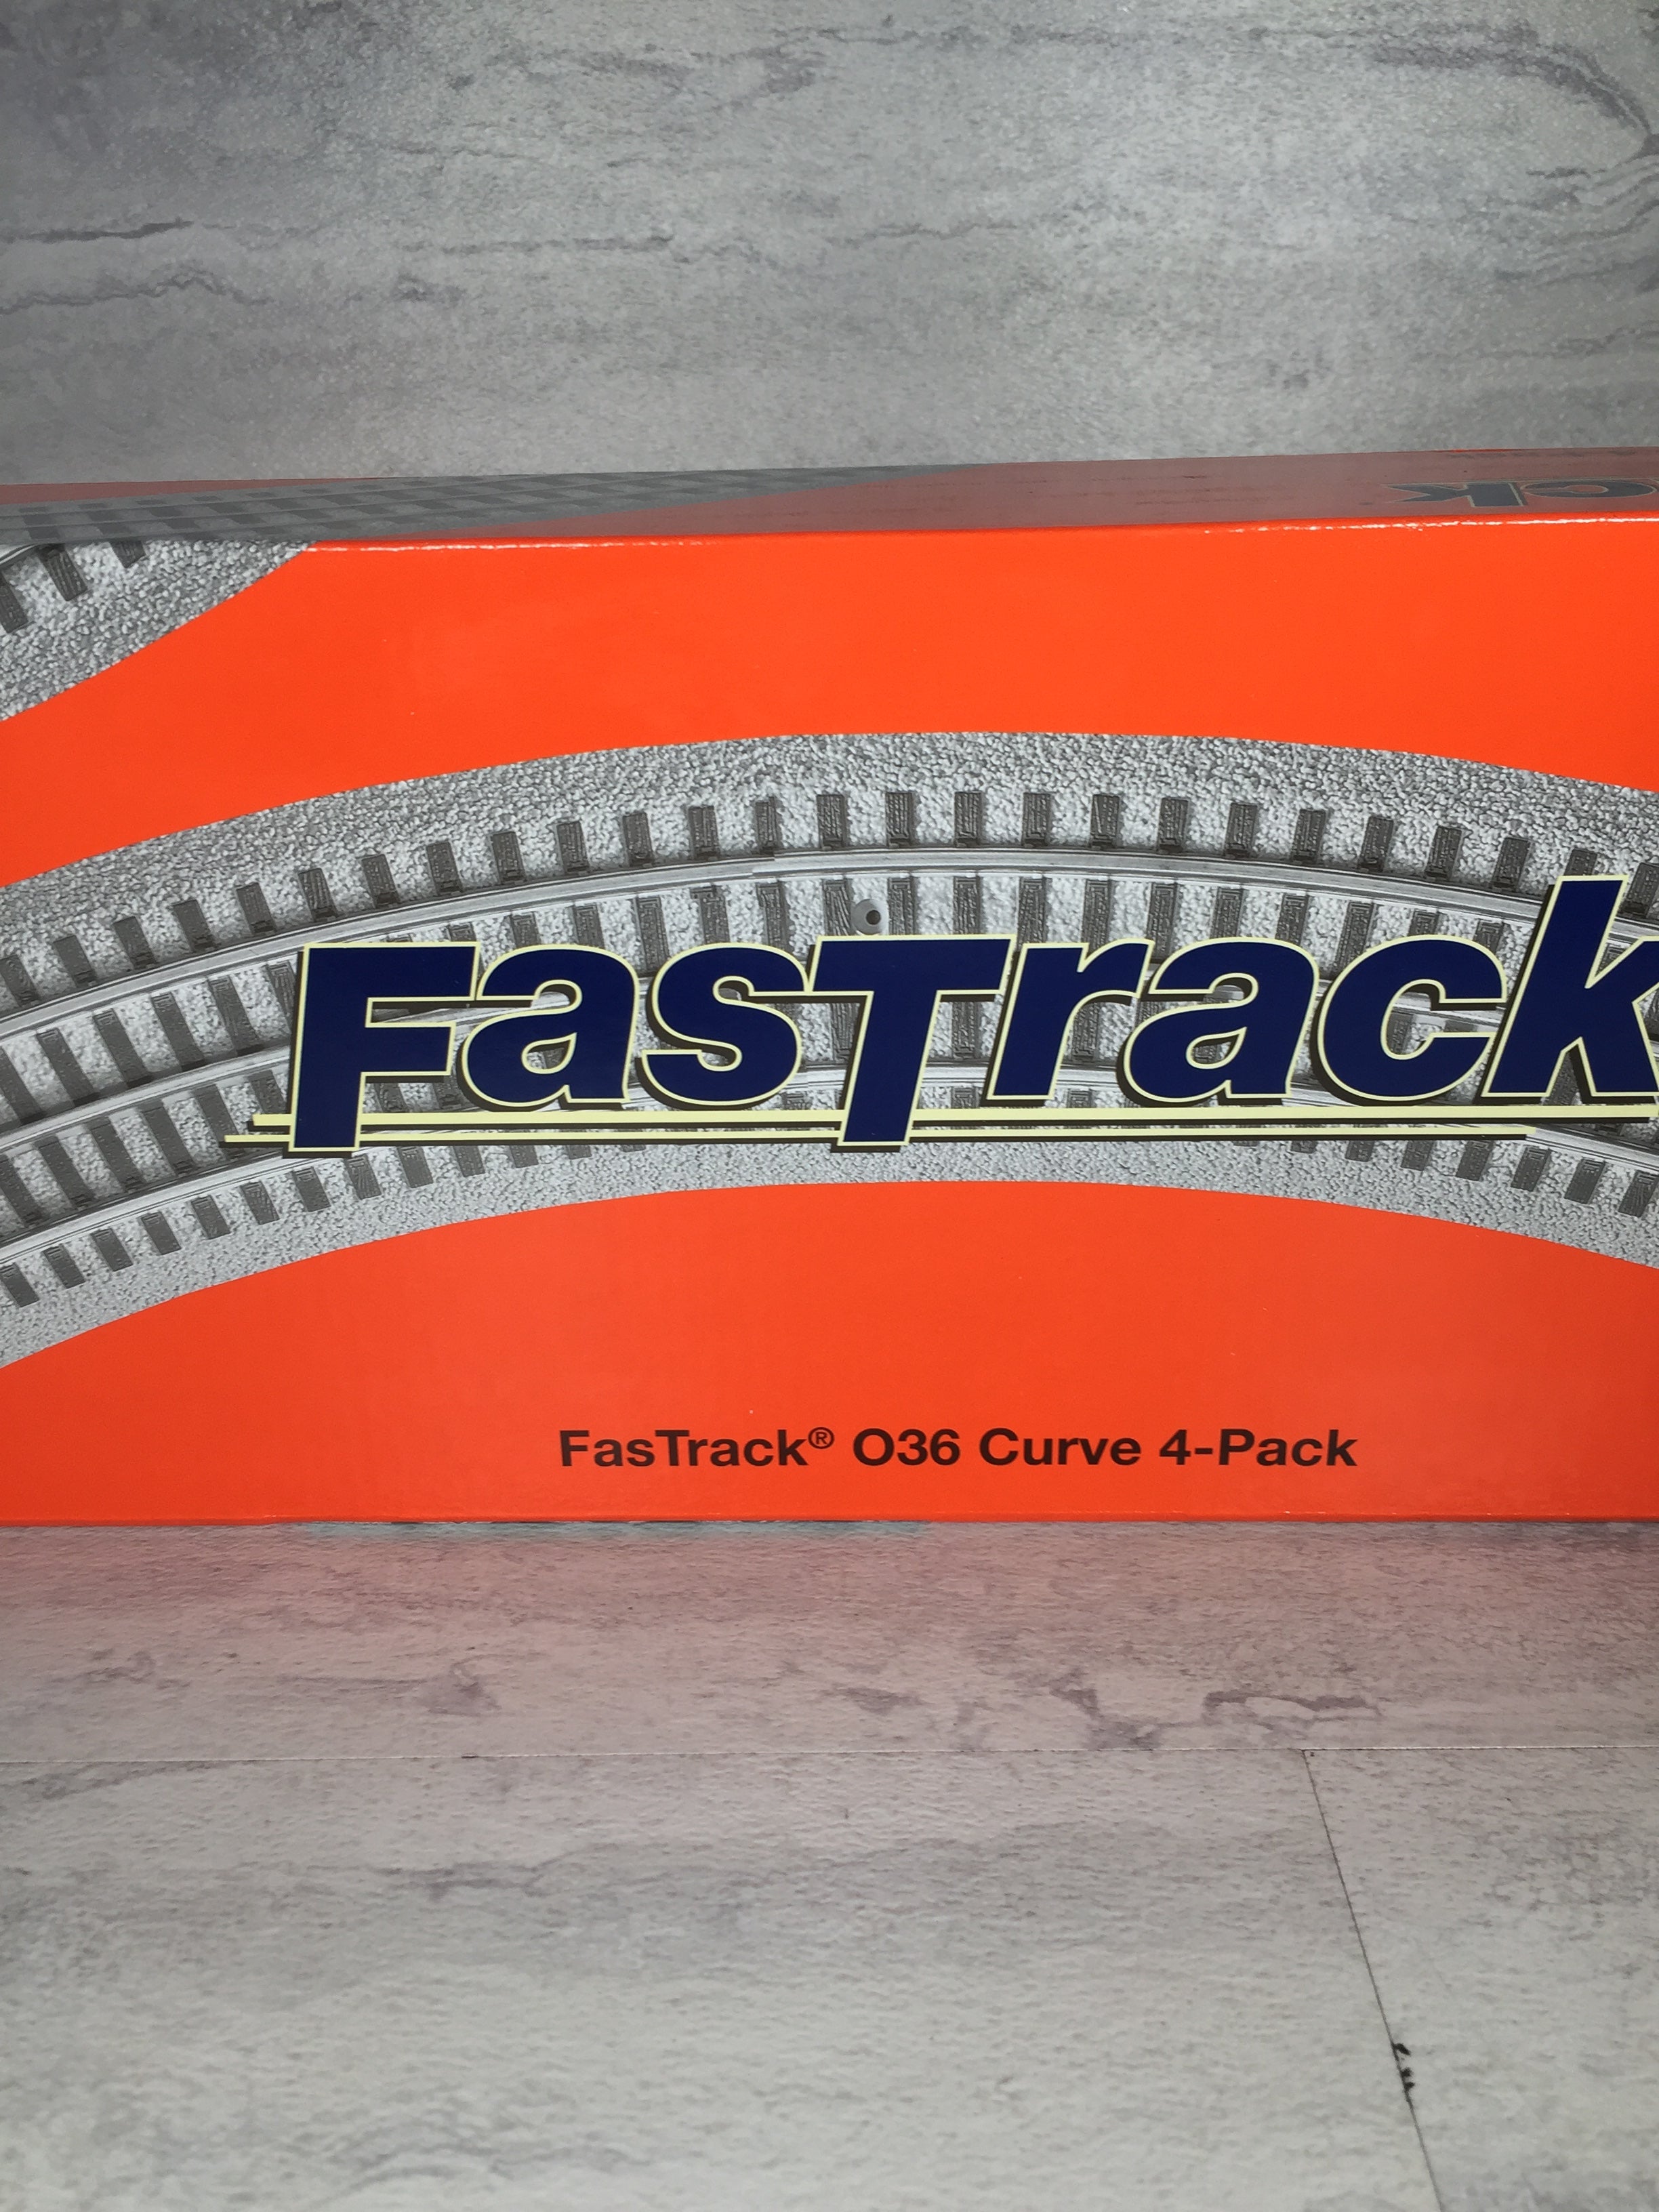 Lionel FasTrack O36 Curve 4-Pack (6888961867959)